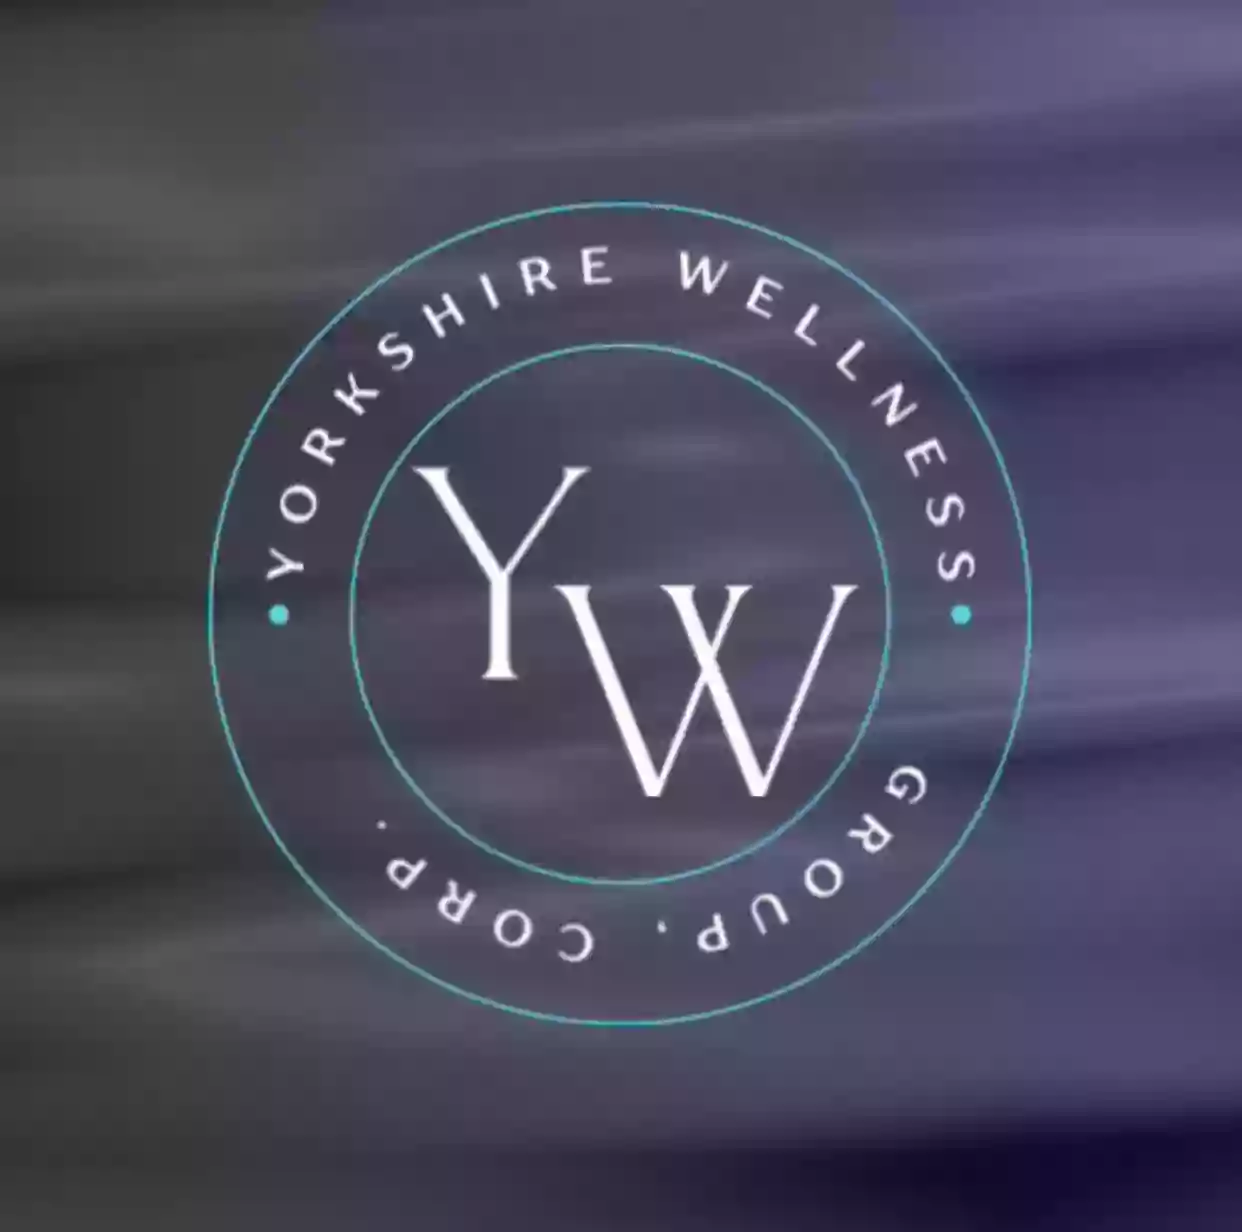 Yorkshire Wellness Group, Corp.